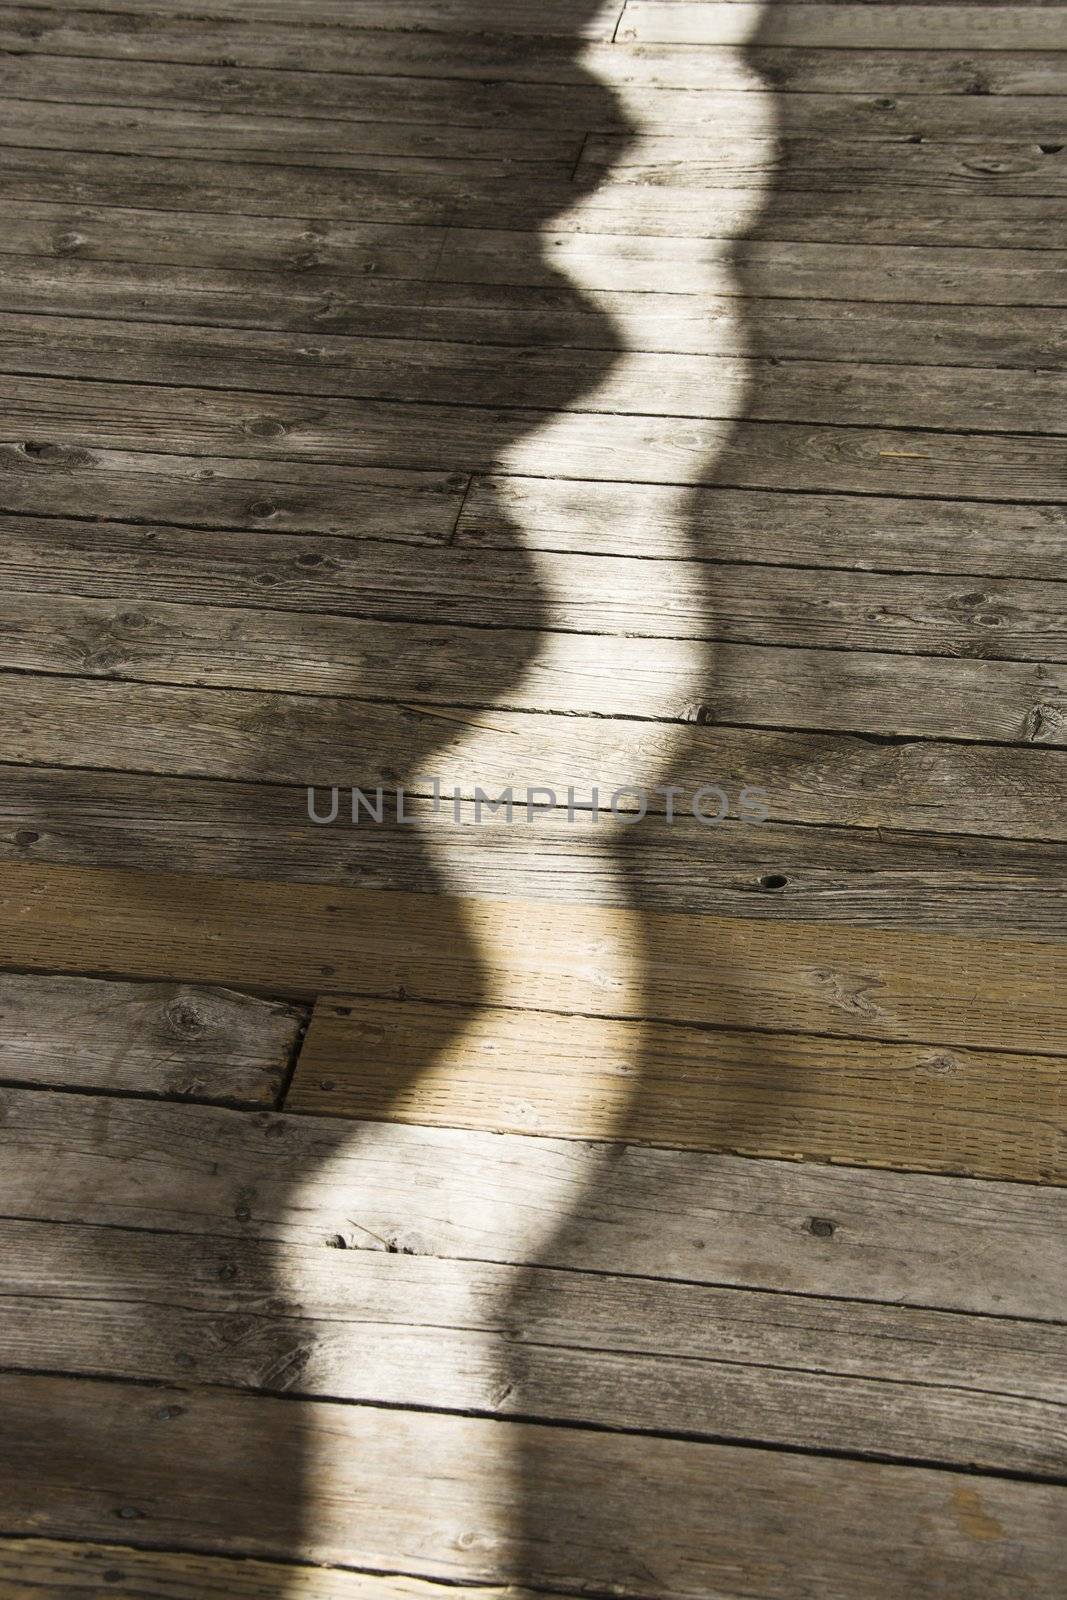 Curvy line of sunlight on wooden walkway.